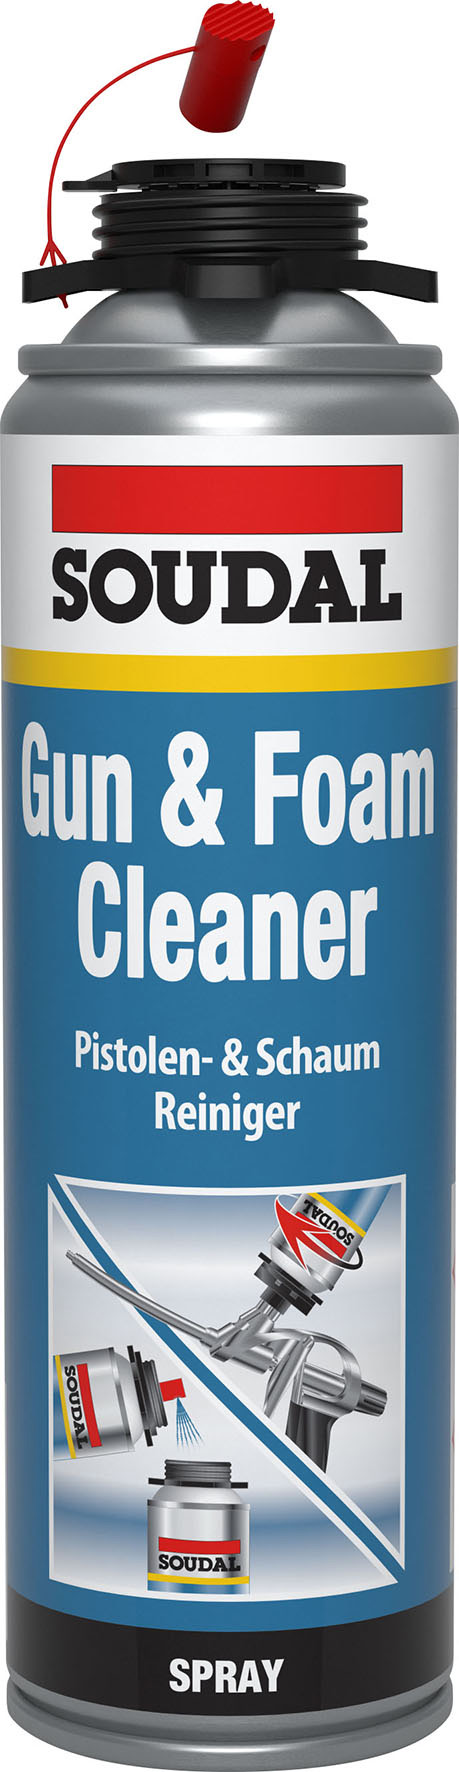 Soudal Gun & Foam Reiniger, Dose 500 ml für Pistole + Schaum - Art. Nr. 106310